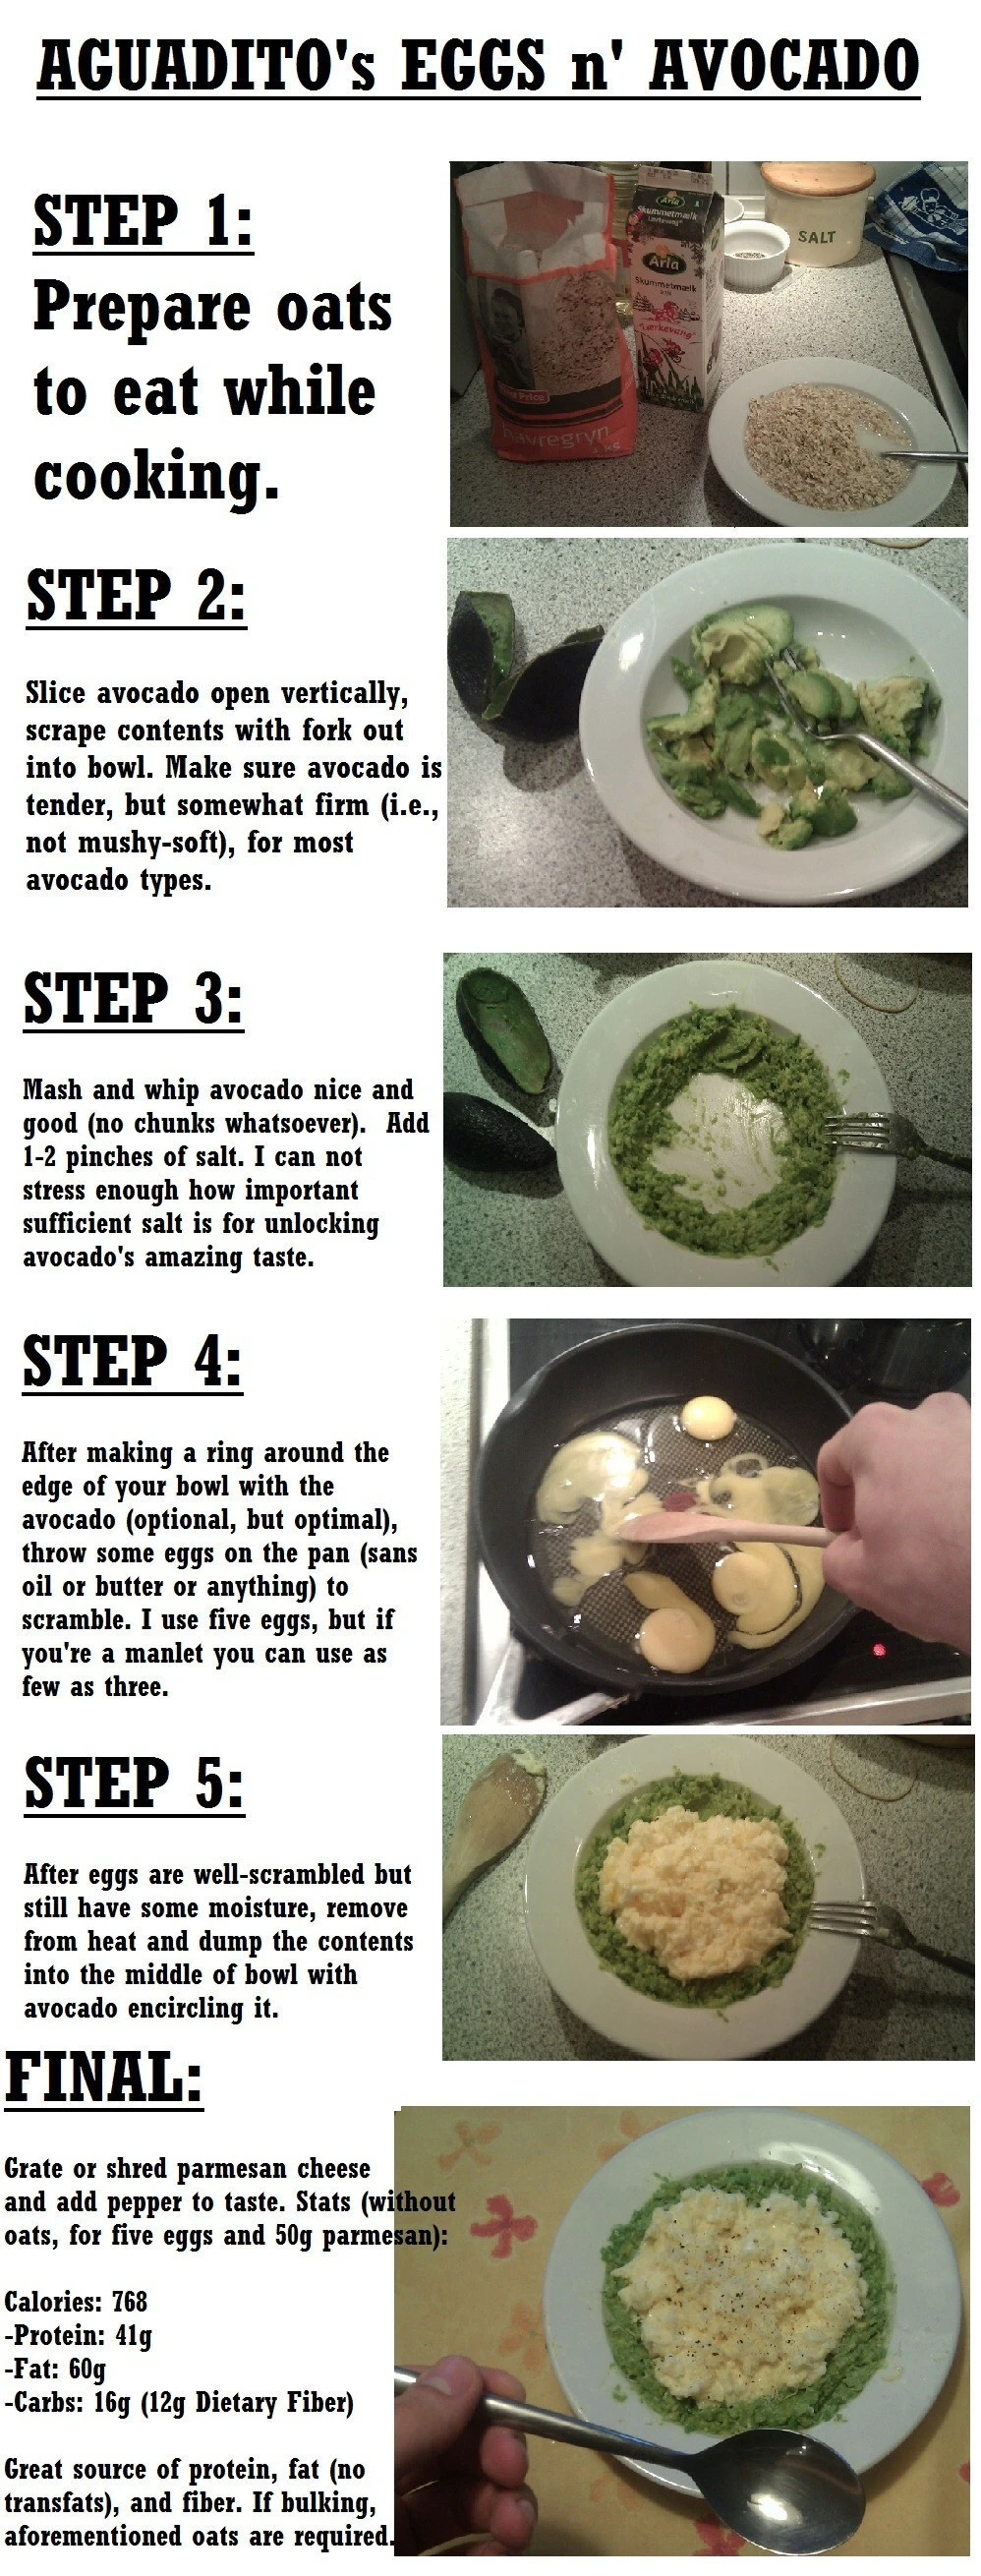 /fit/ recipe - Eggs n Avocado